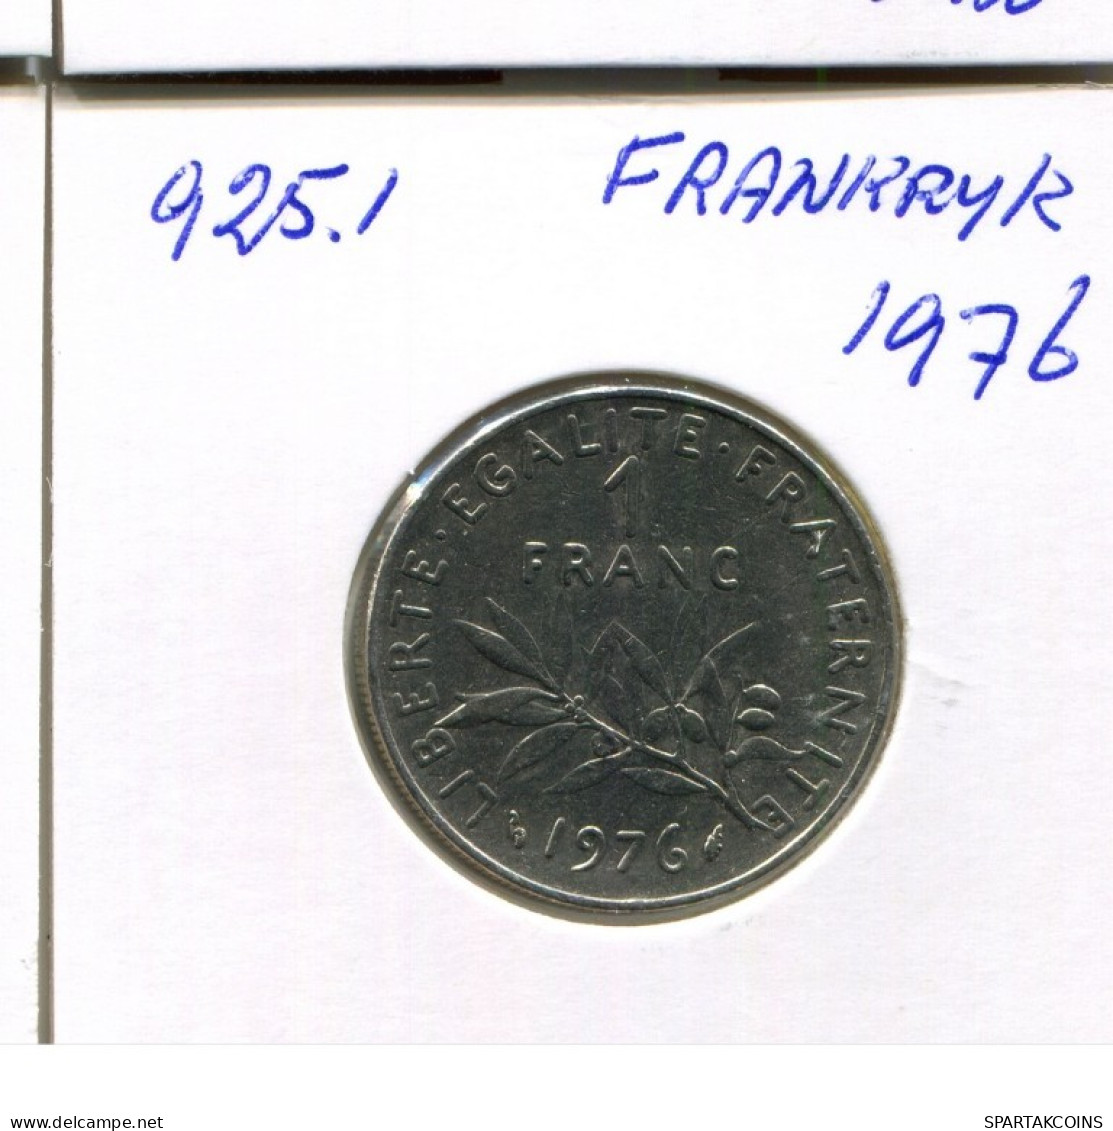 1 FRANC 1976 FRANCE Coin French Coin #AN318.U.A - 1 Franc